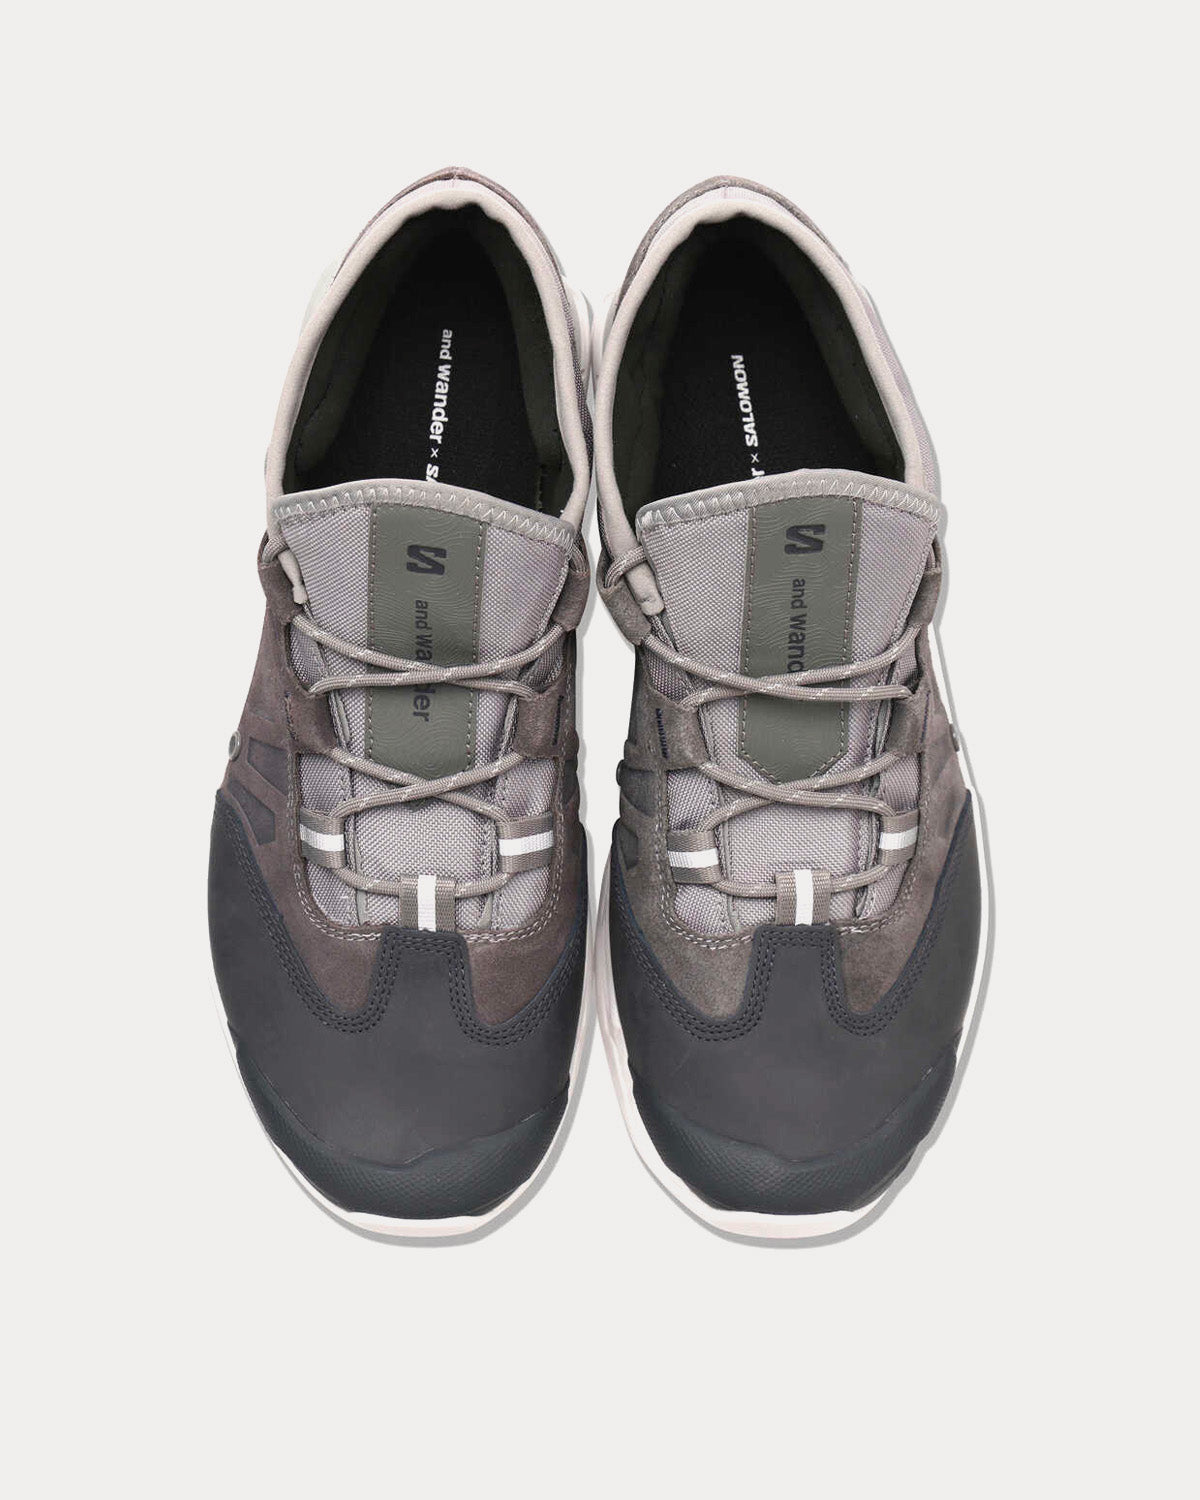 Salomon x And Wander - Jungle Ultra Low Grey Low Top Sneakers